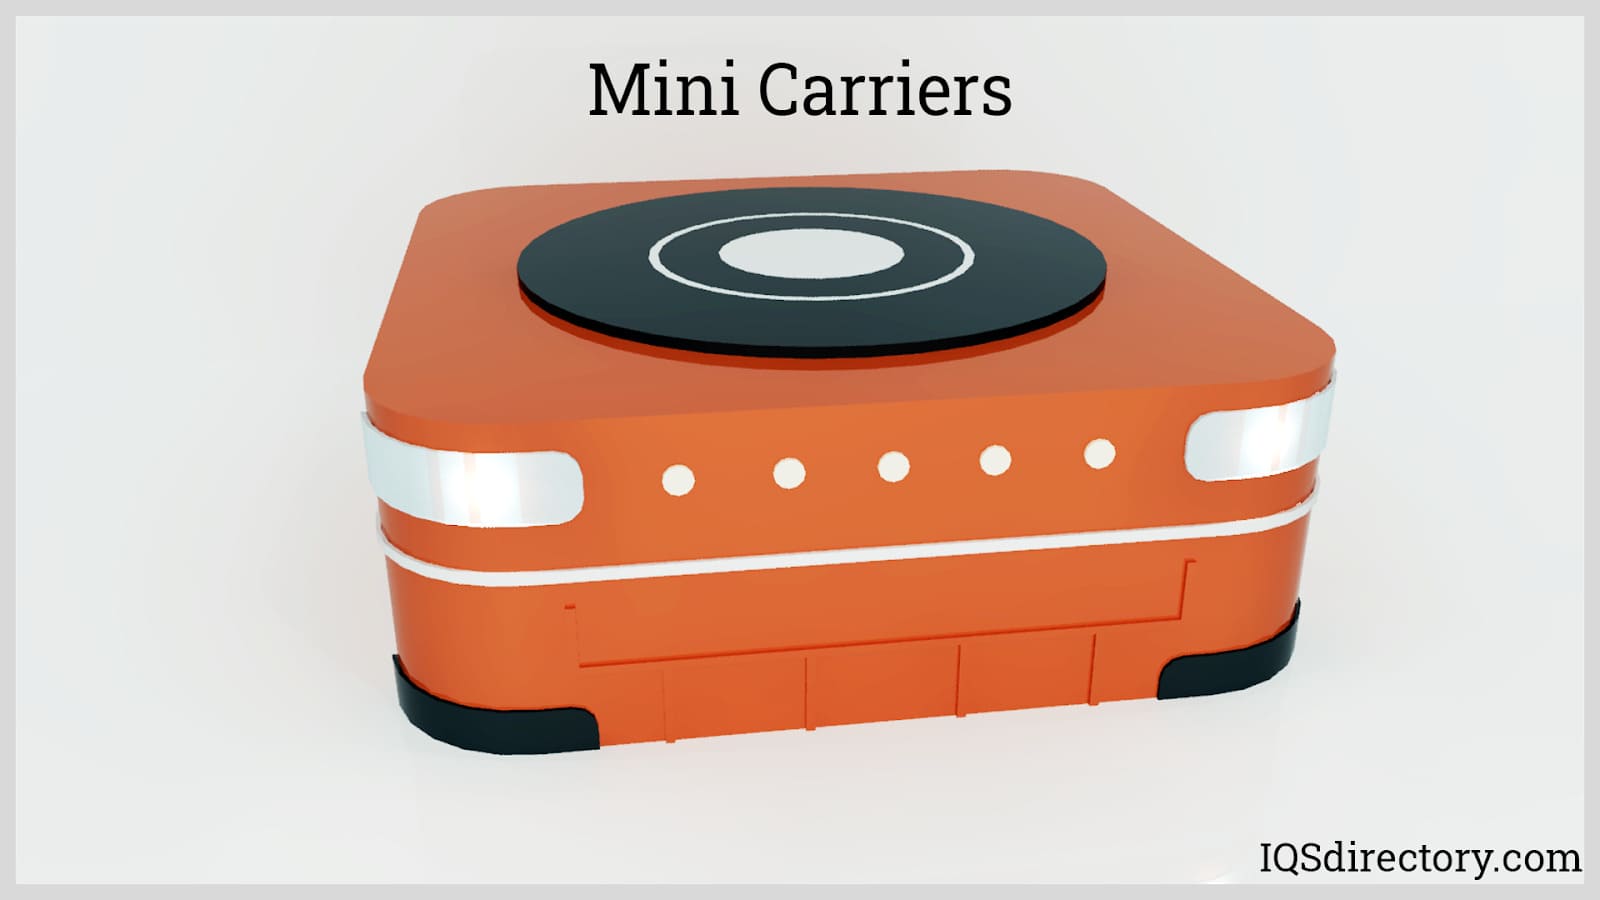 Mini Carriers